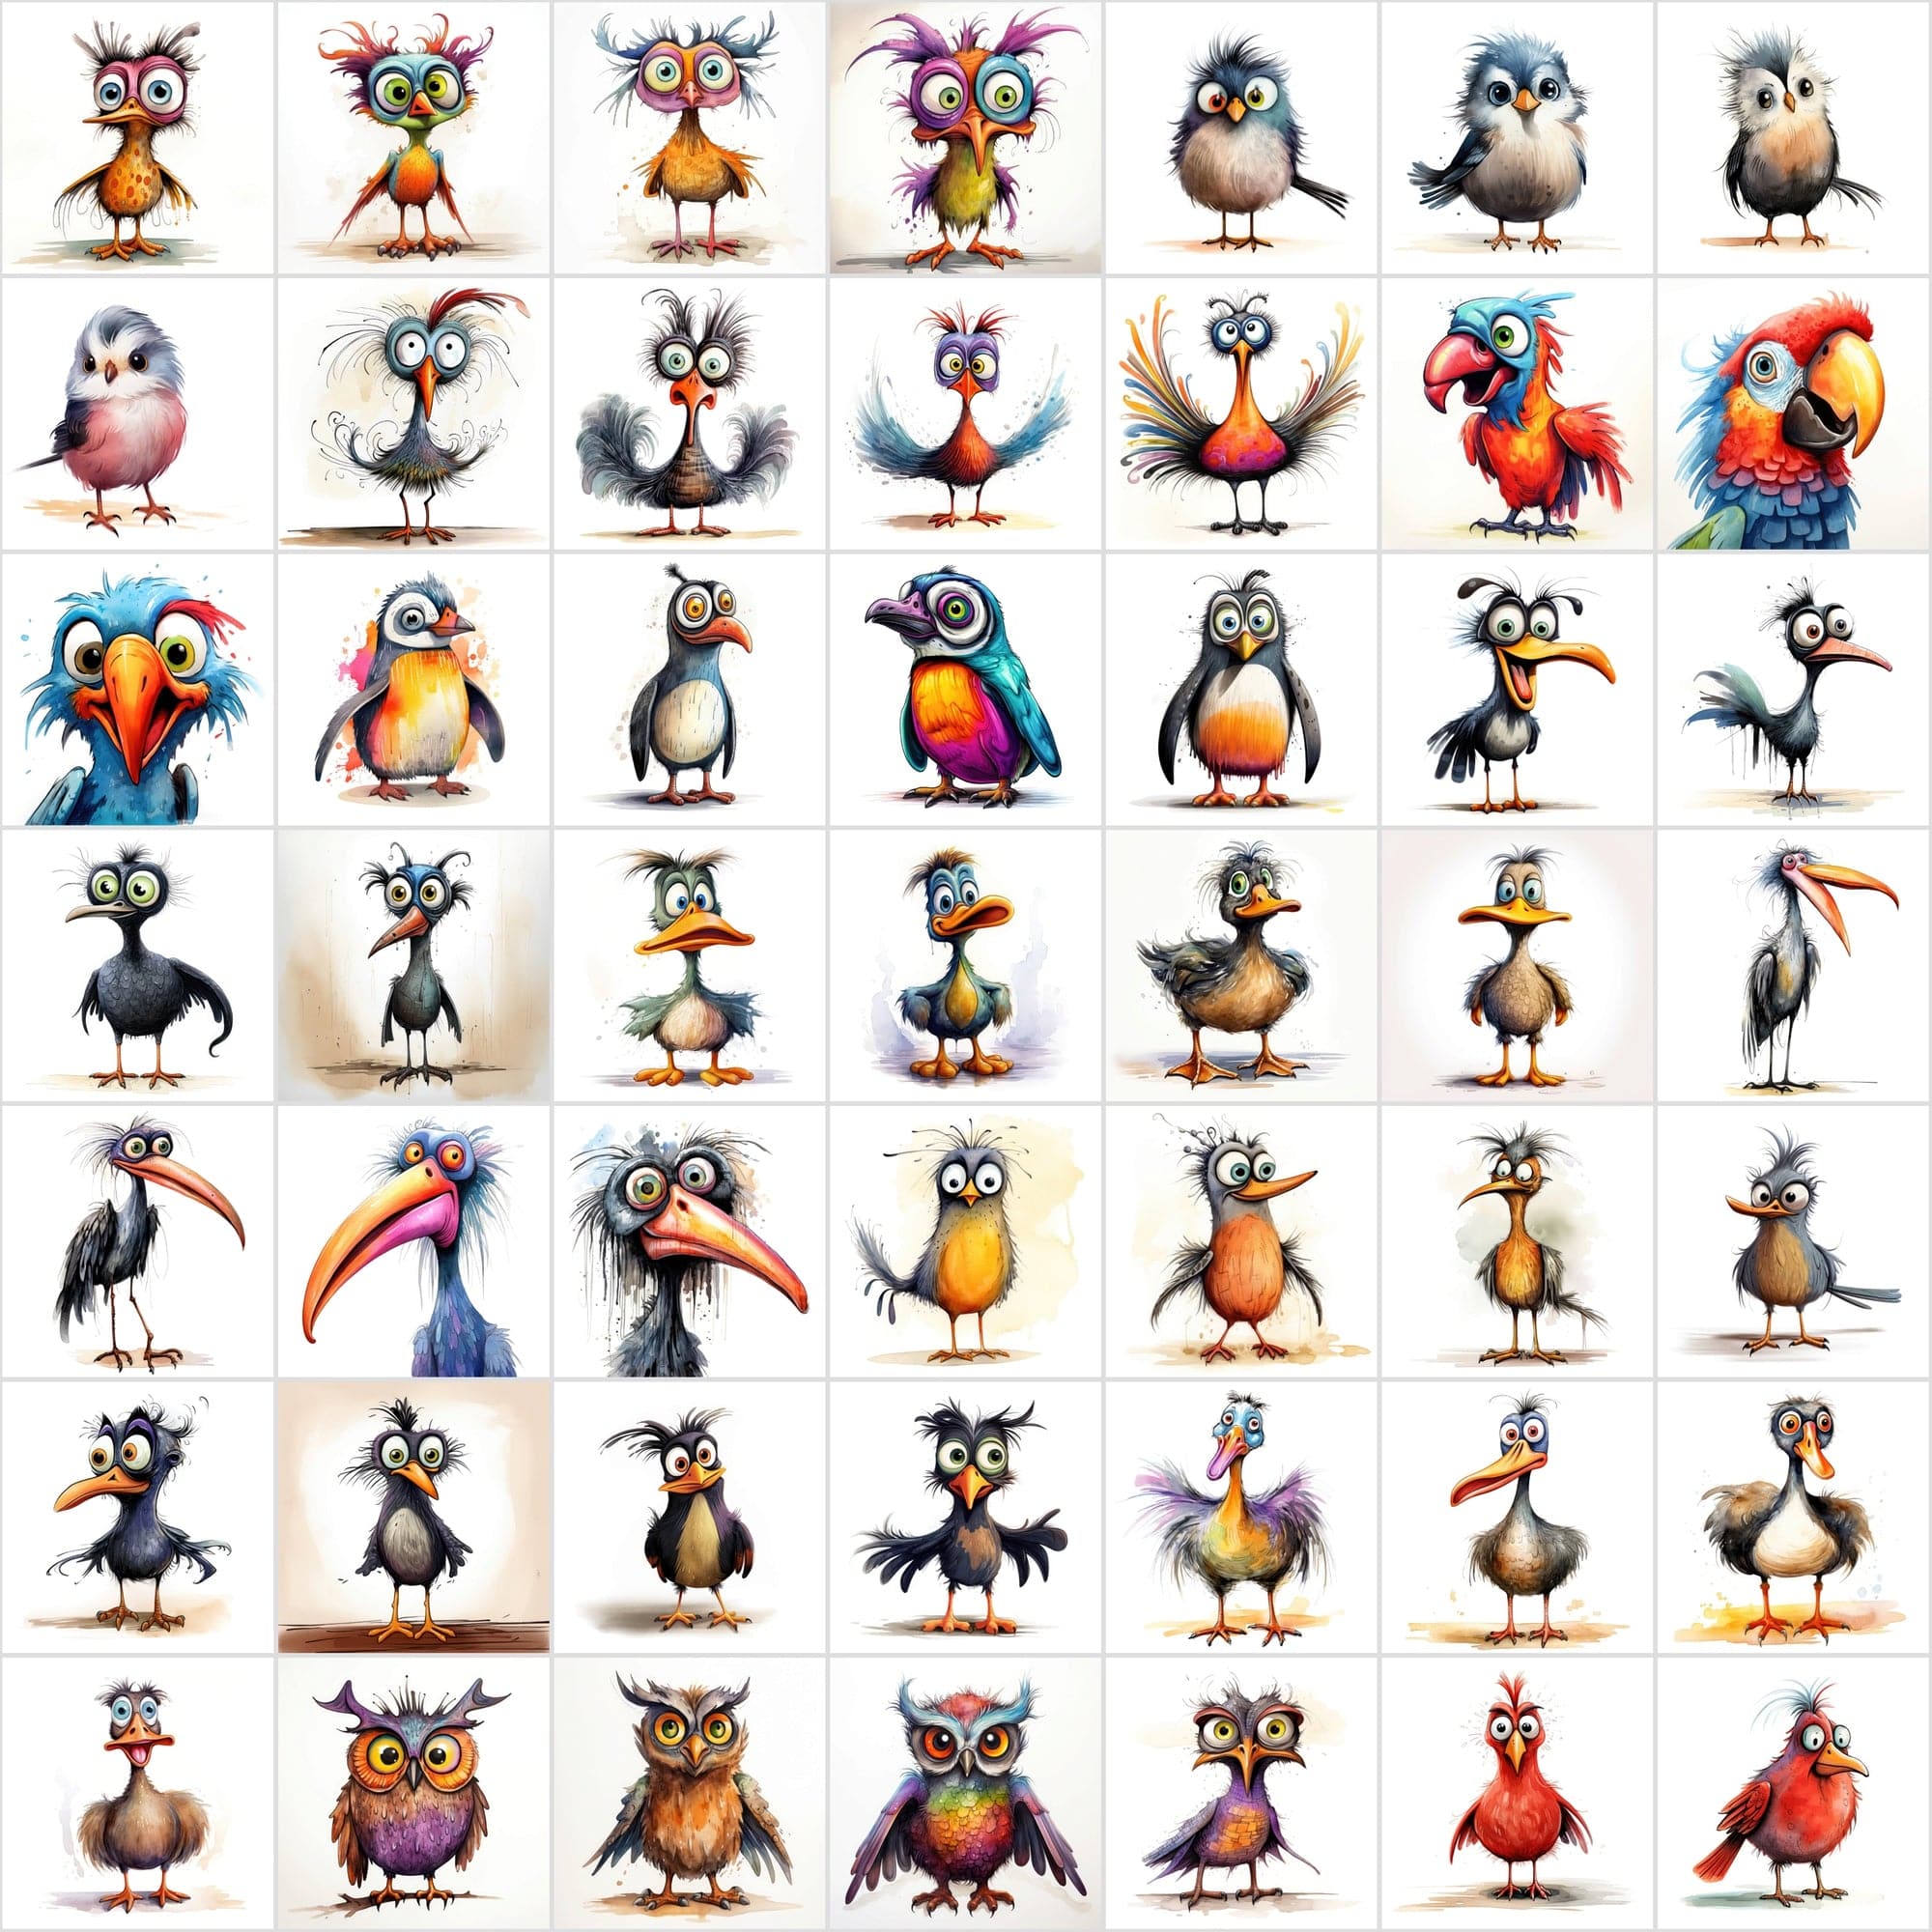 Colorful Birds with Big Eyes: 590 JPG & PNG Images – Funny Look Digital Download Sumobundle